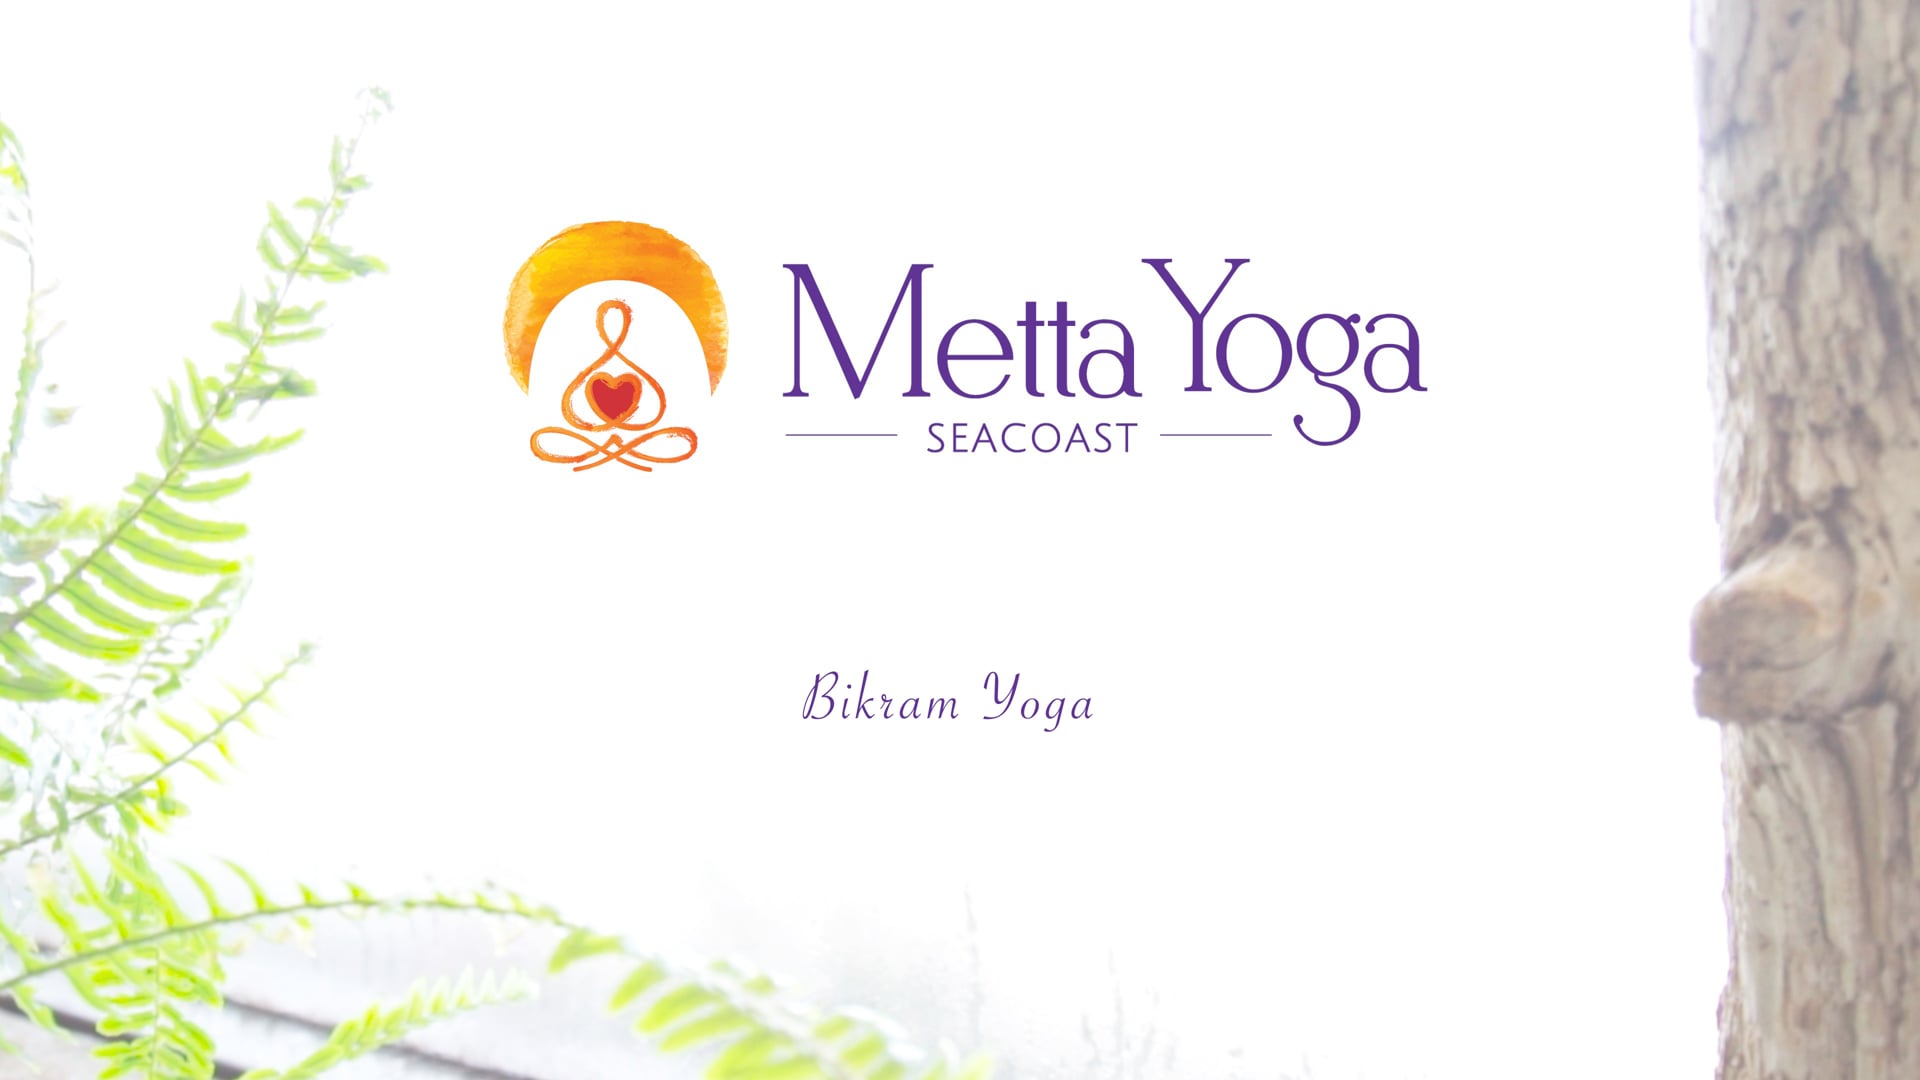 Metta Yoga Seacoast: Bikram Yoga